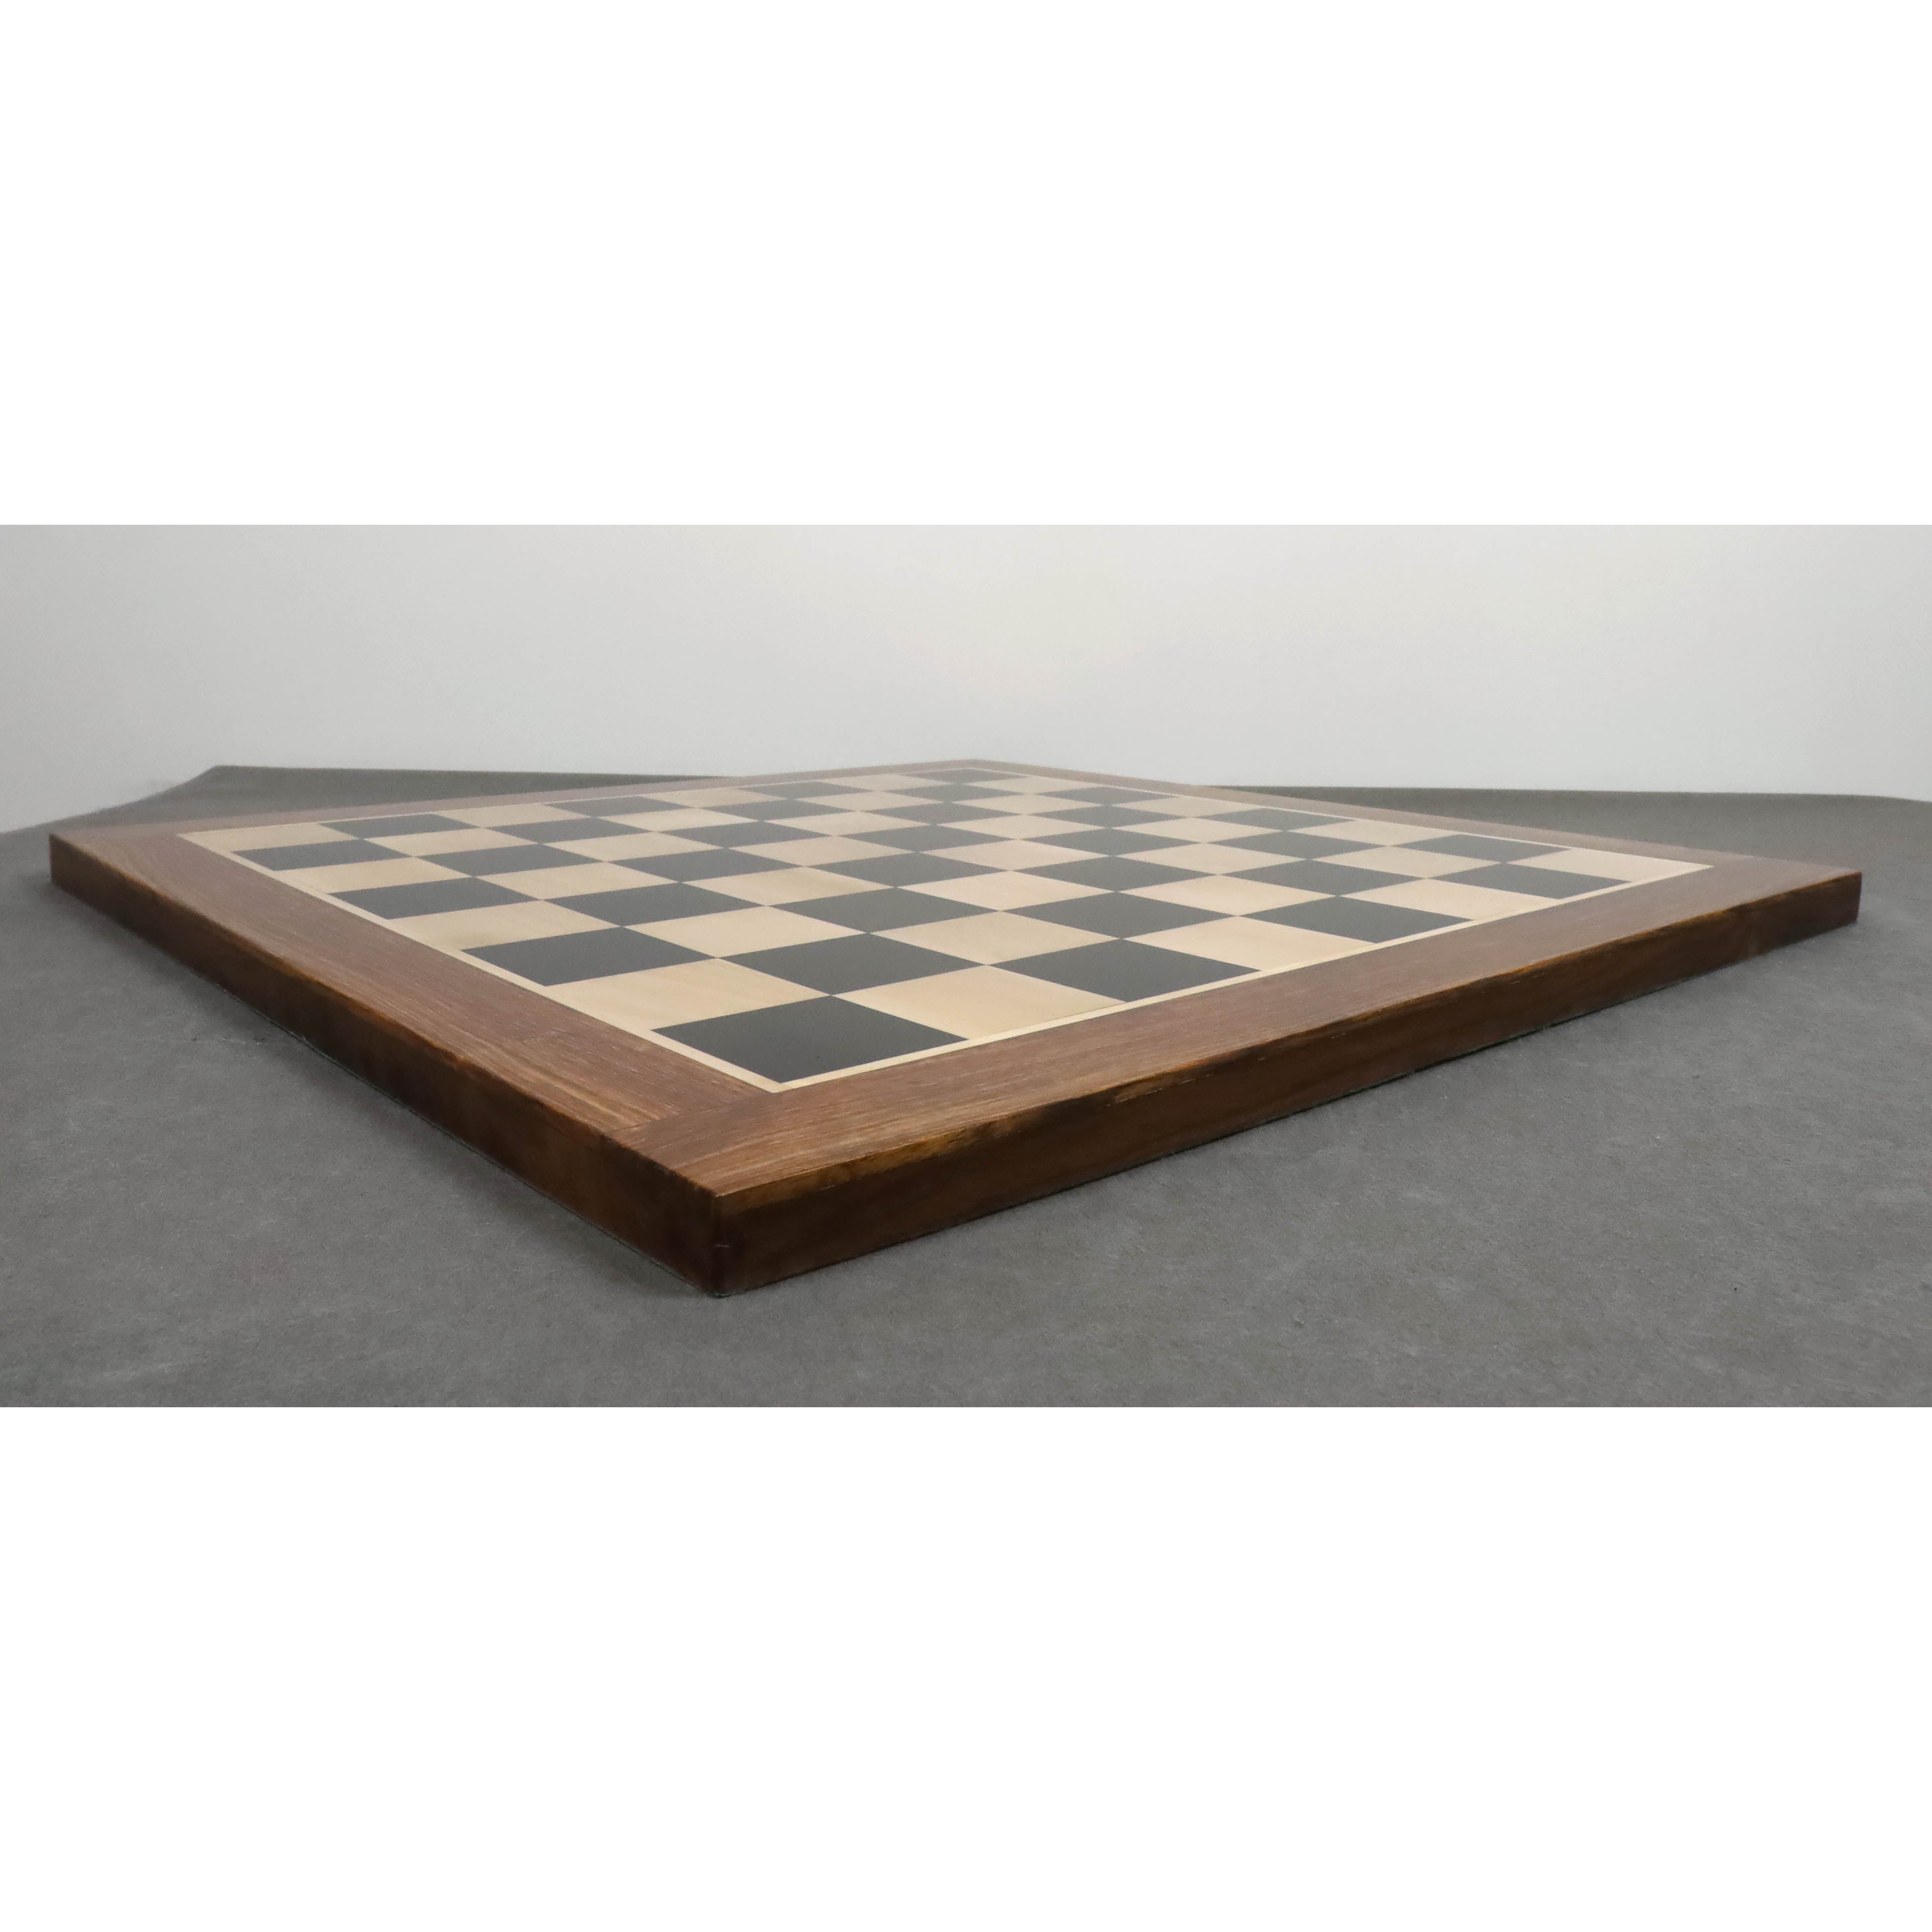 Combo of 4.6" Prestige Luxury Staunton Ebony Chess Pieces with 23" Chessboard and Storage Box